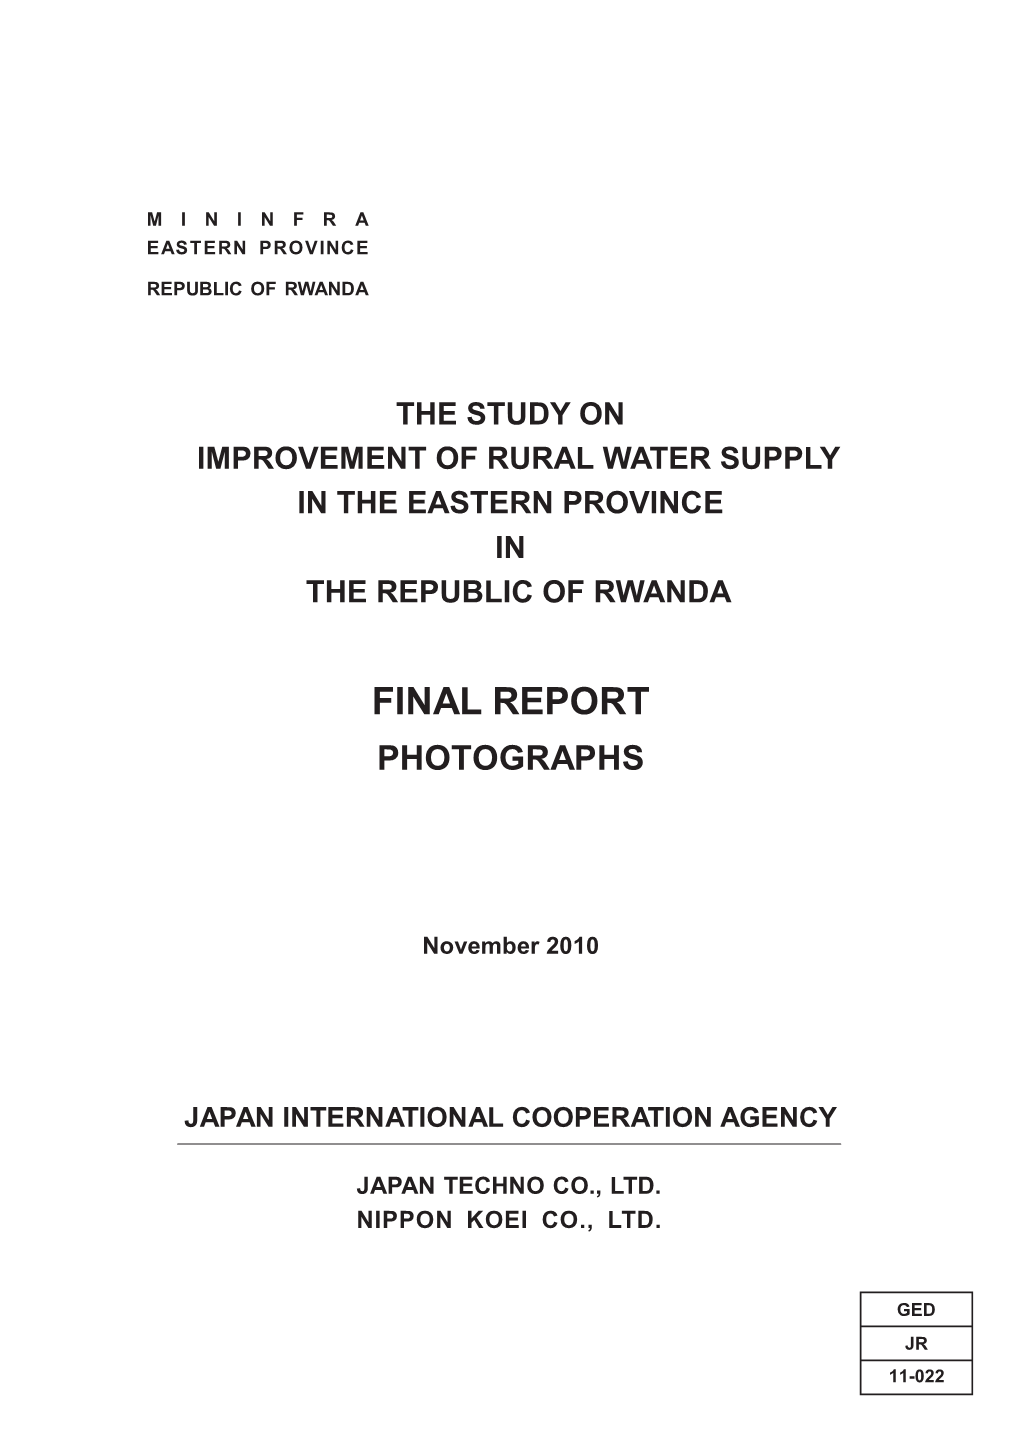 Final Report Photographs